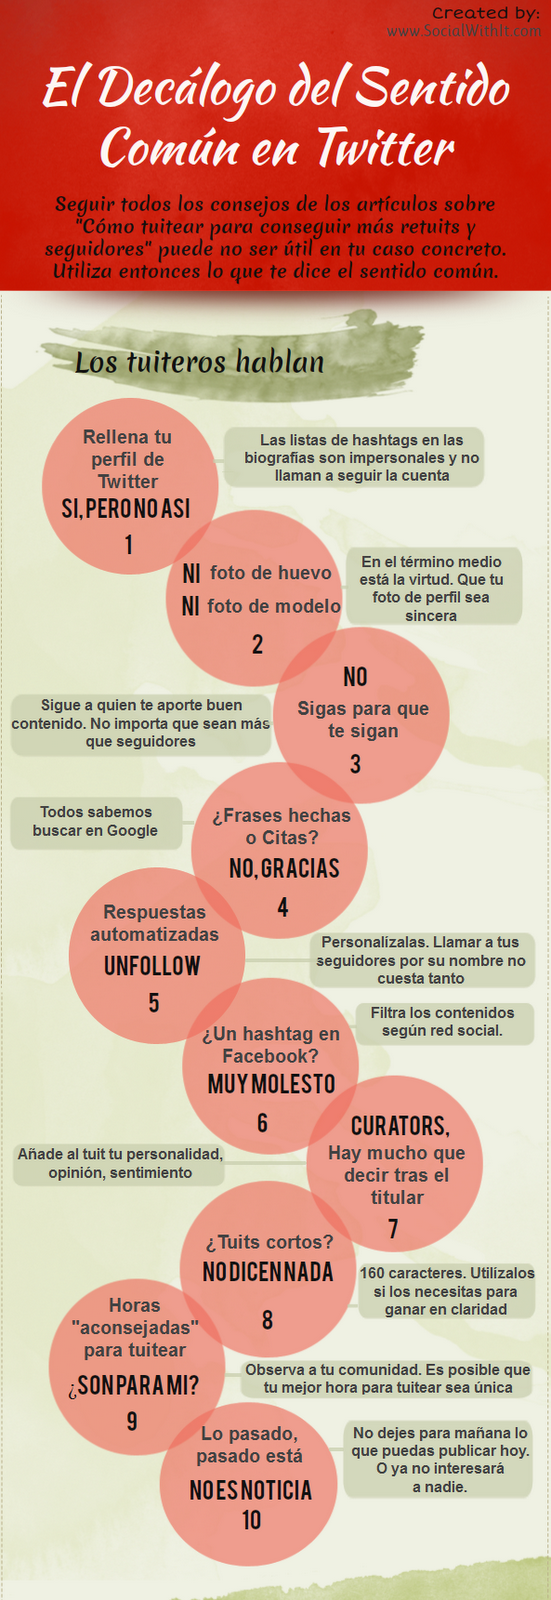 Infografia-decalogo-sentido-comun-en-twitter curioseandito.blogspot.com.es 2012 10 sentido-comun-en-twitter-infografia